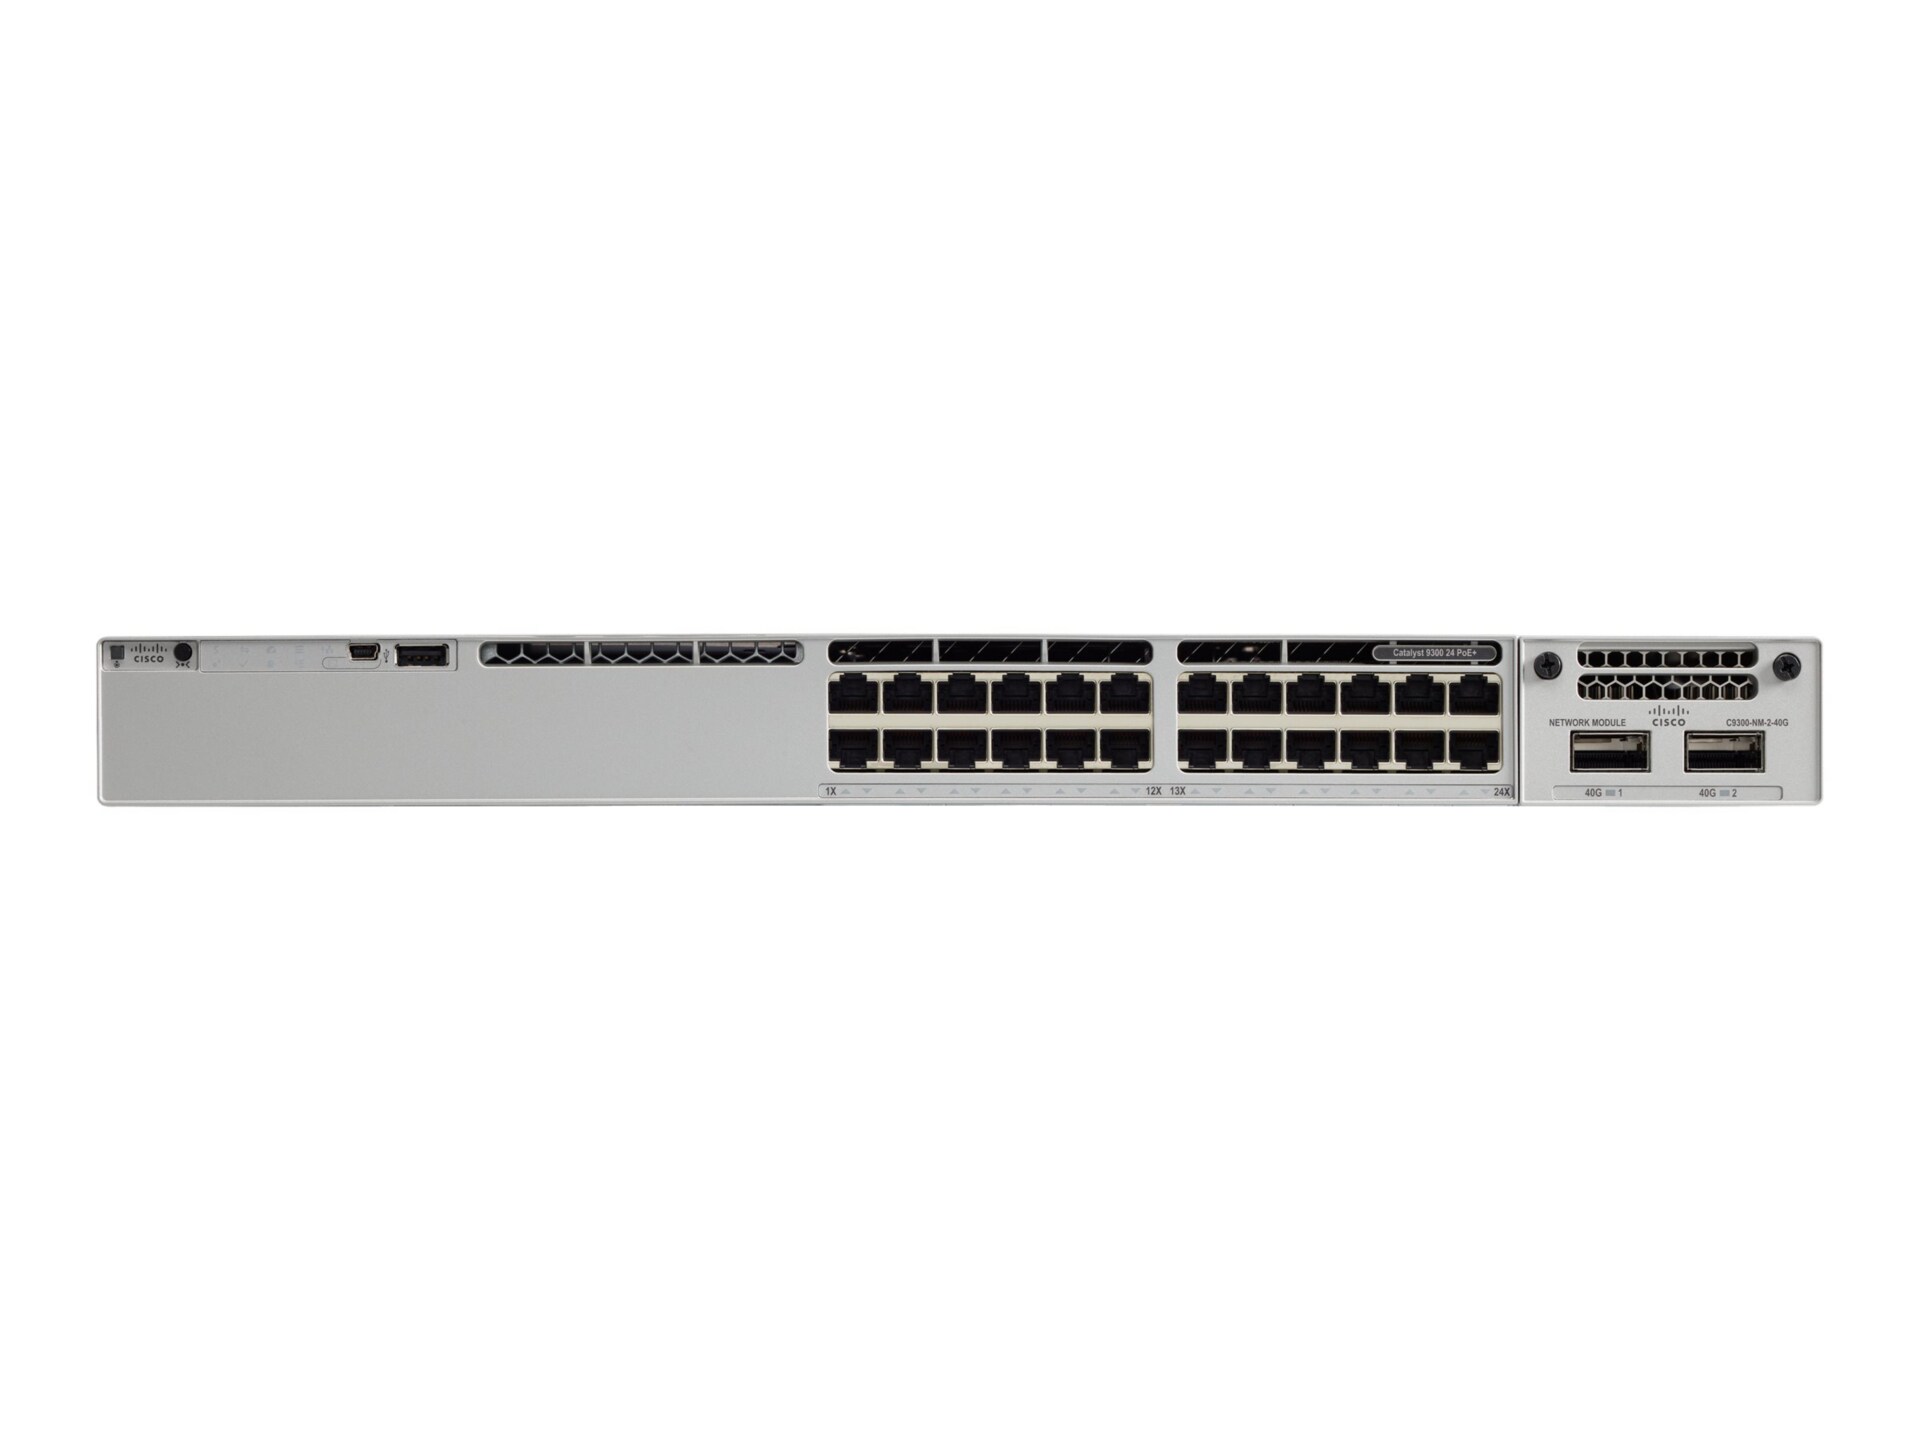 Cisco Catalyst 9300 - switch - 24 ports - managed - rack-mountable